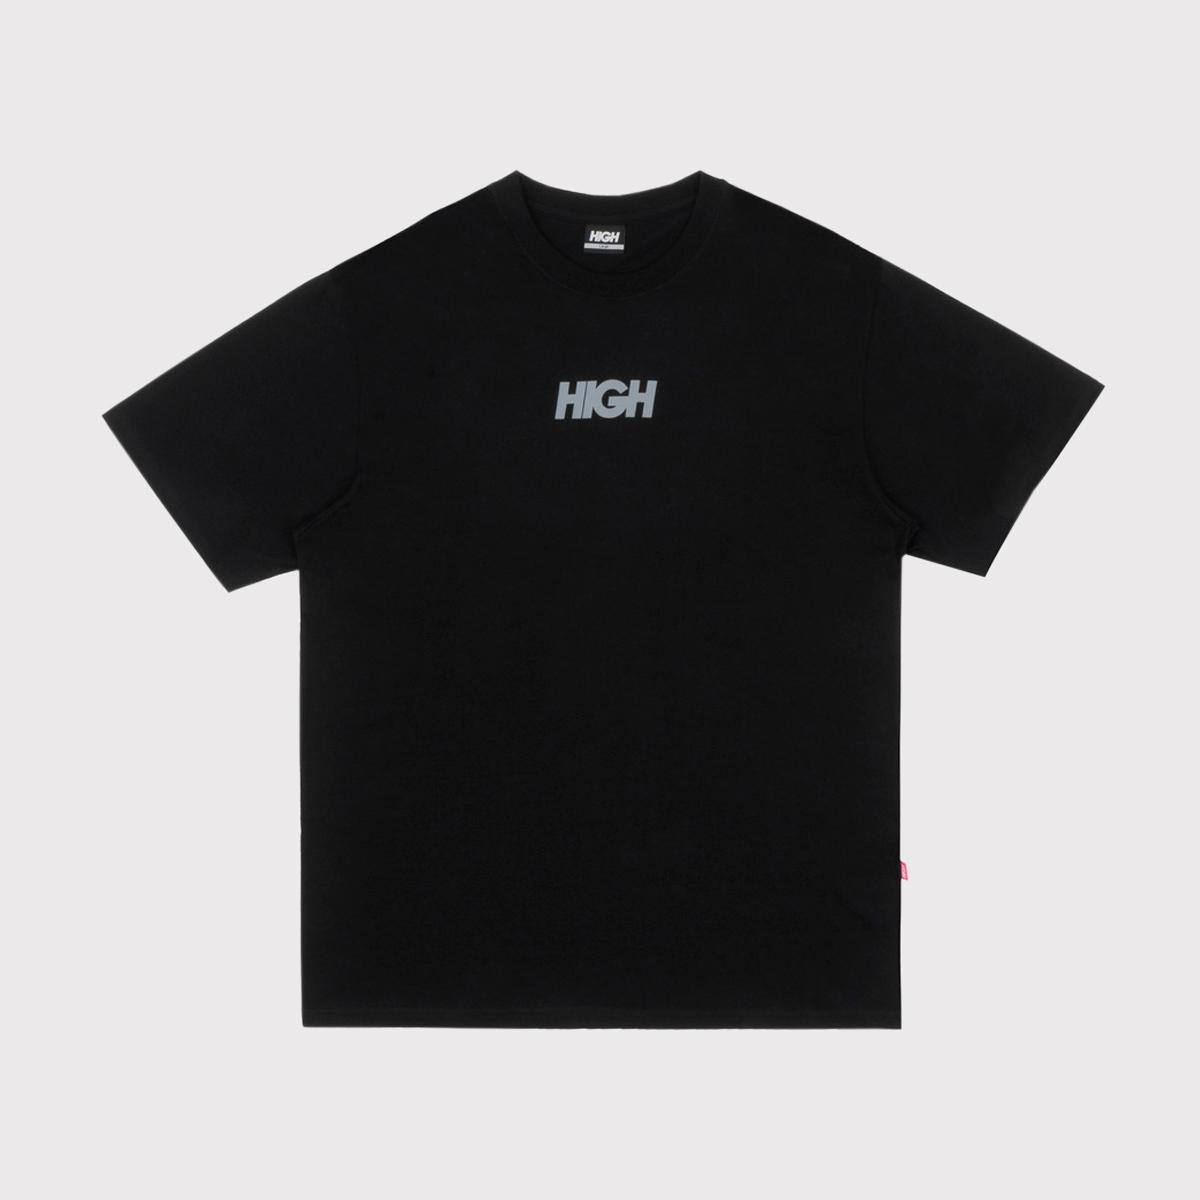 Camiseta High Company Raglan Tee Tricolore Black - So High Urban Shop